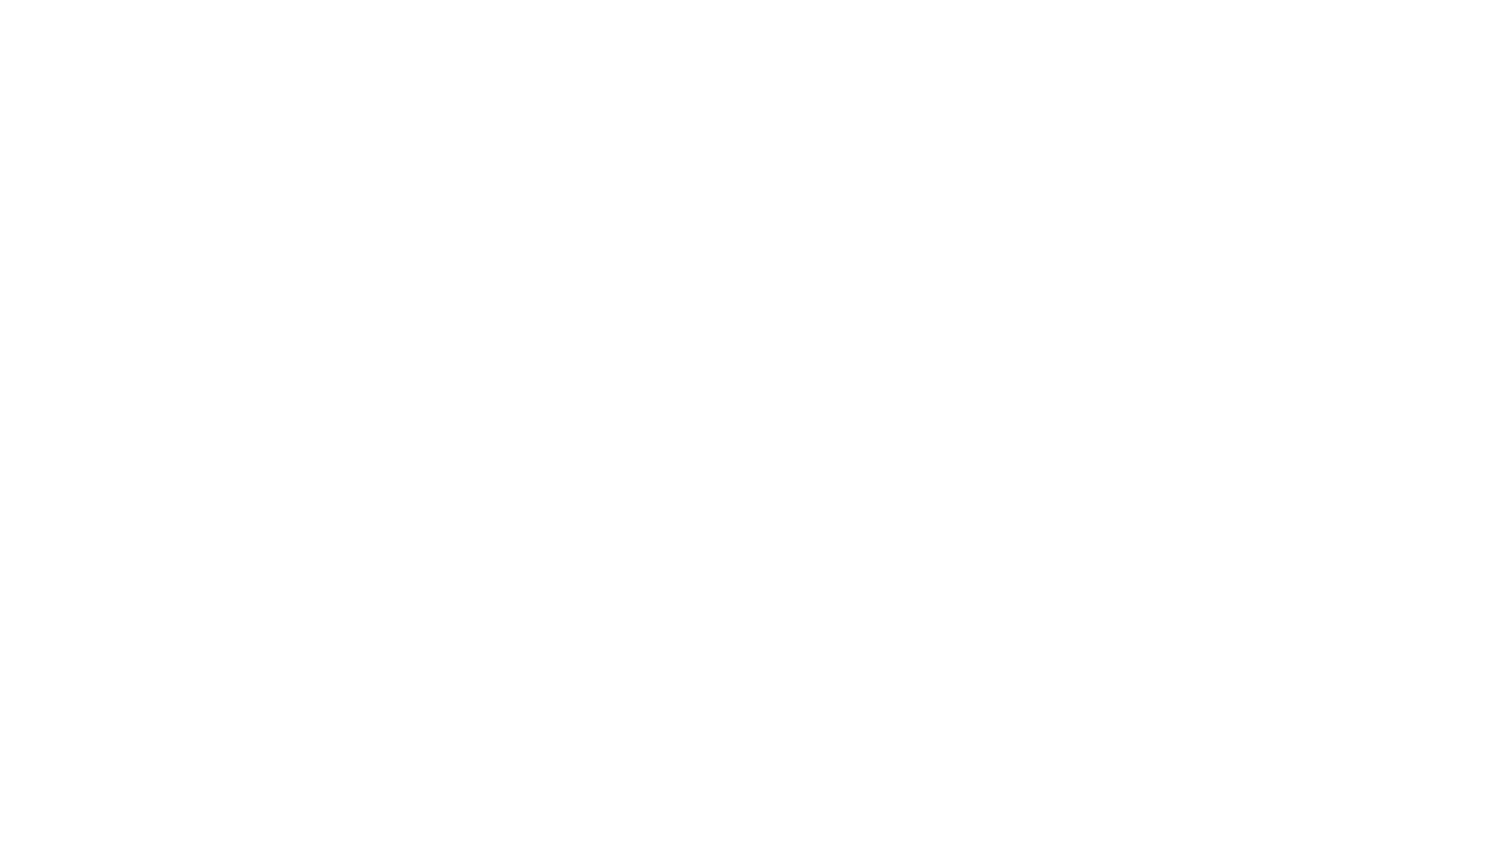 Artists Revealed